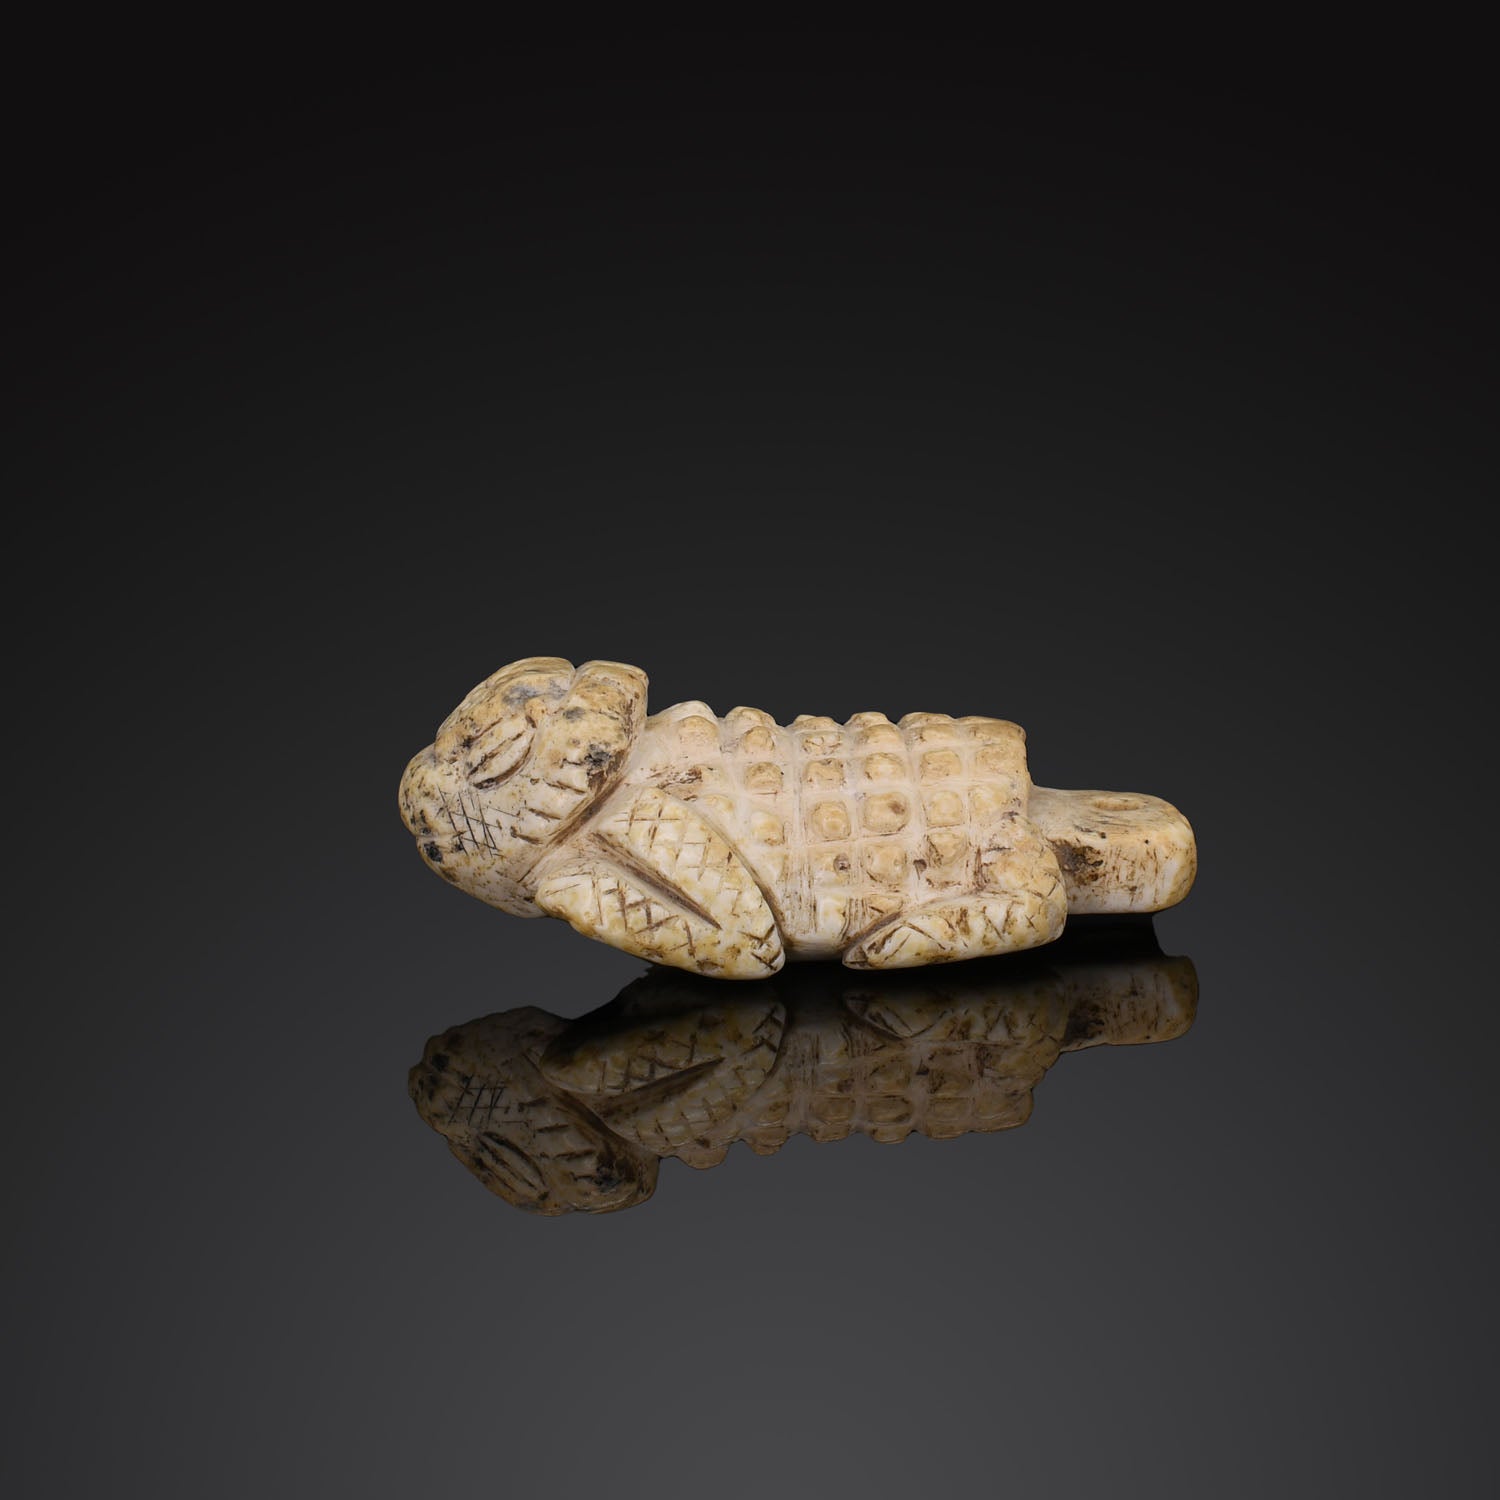 A Nayarit Hardstone Horned Toad Pendant, ca. 300 BCE - 200 CE